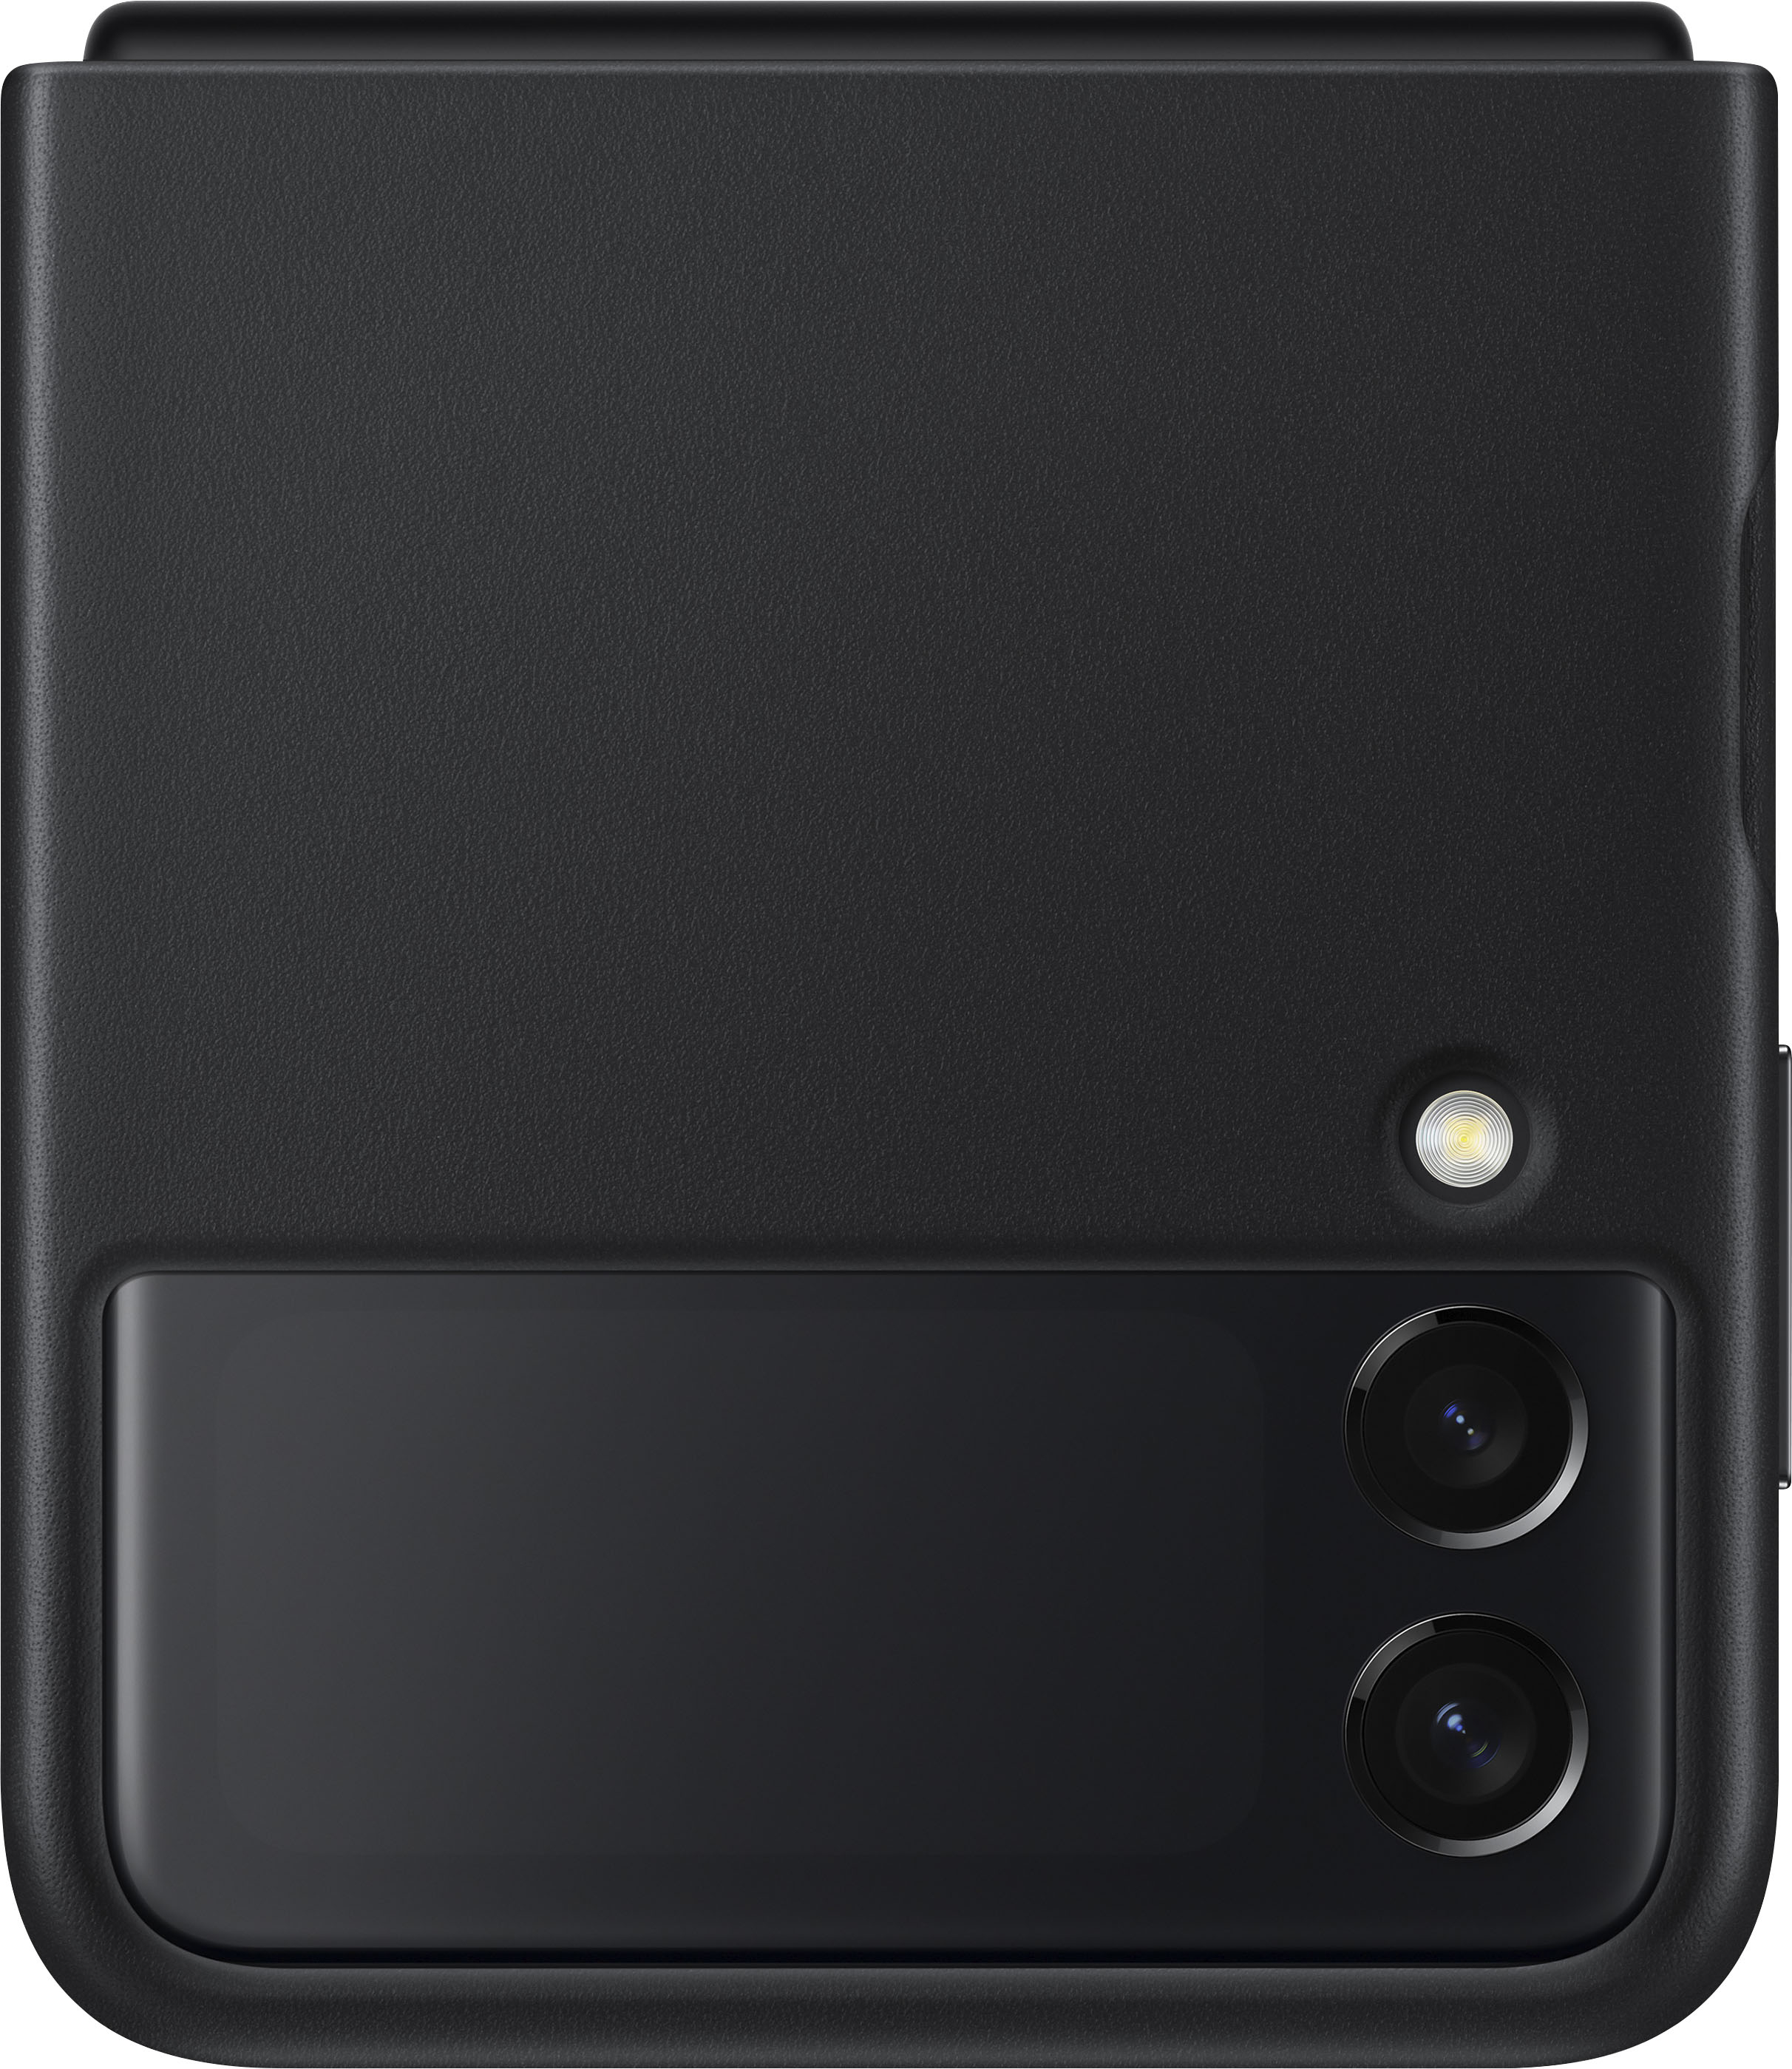 Flip Leather Cover Case for Samsung Galaxy Z Flip Black EF-VF700LBEGUS -  Best Buy